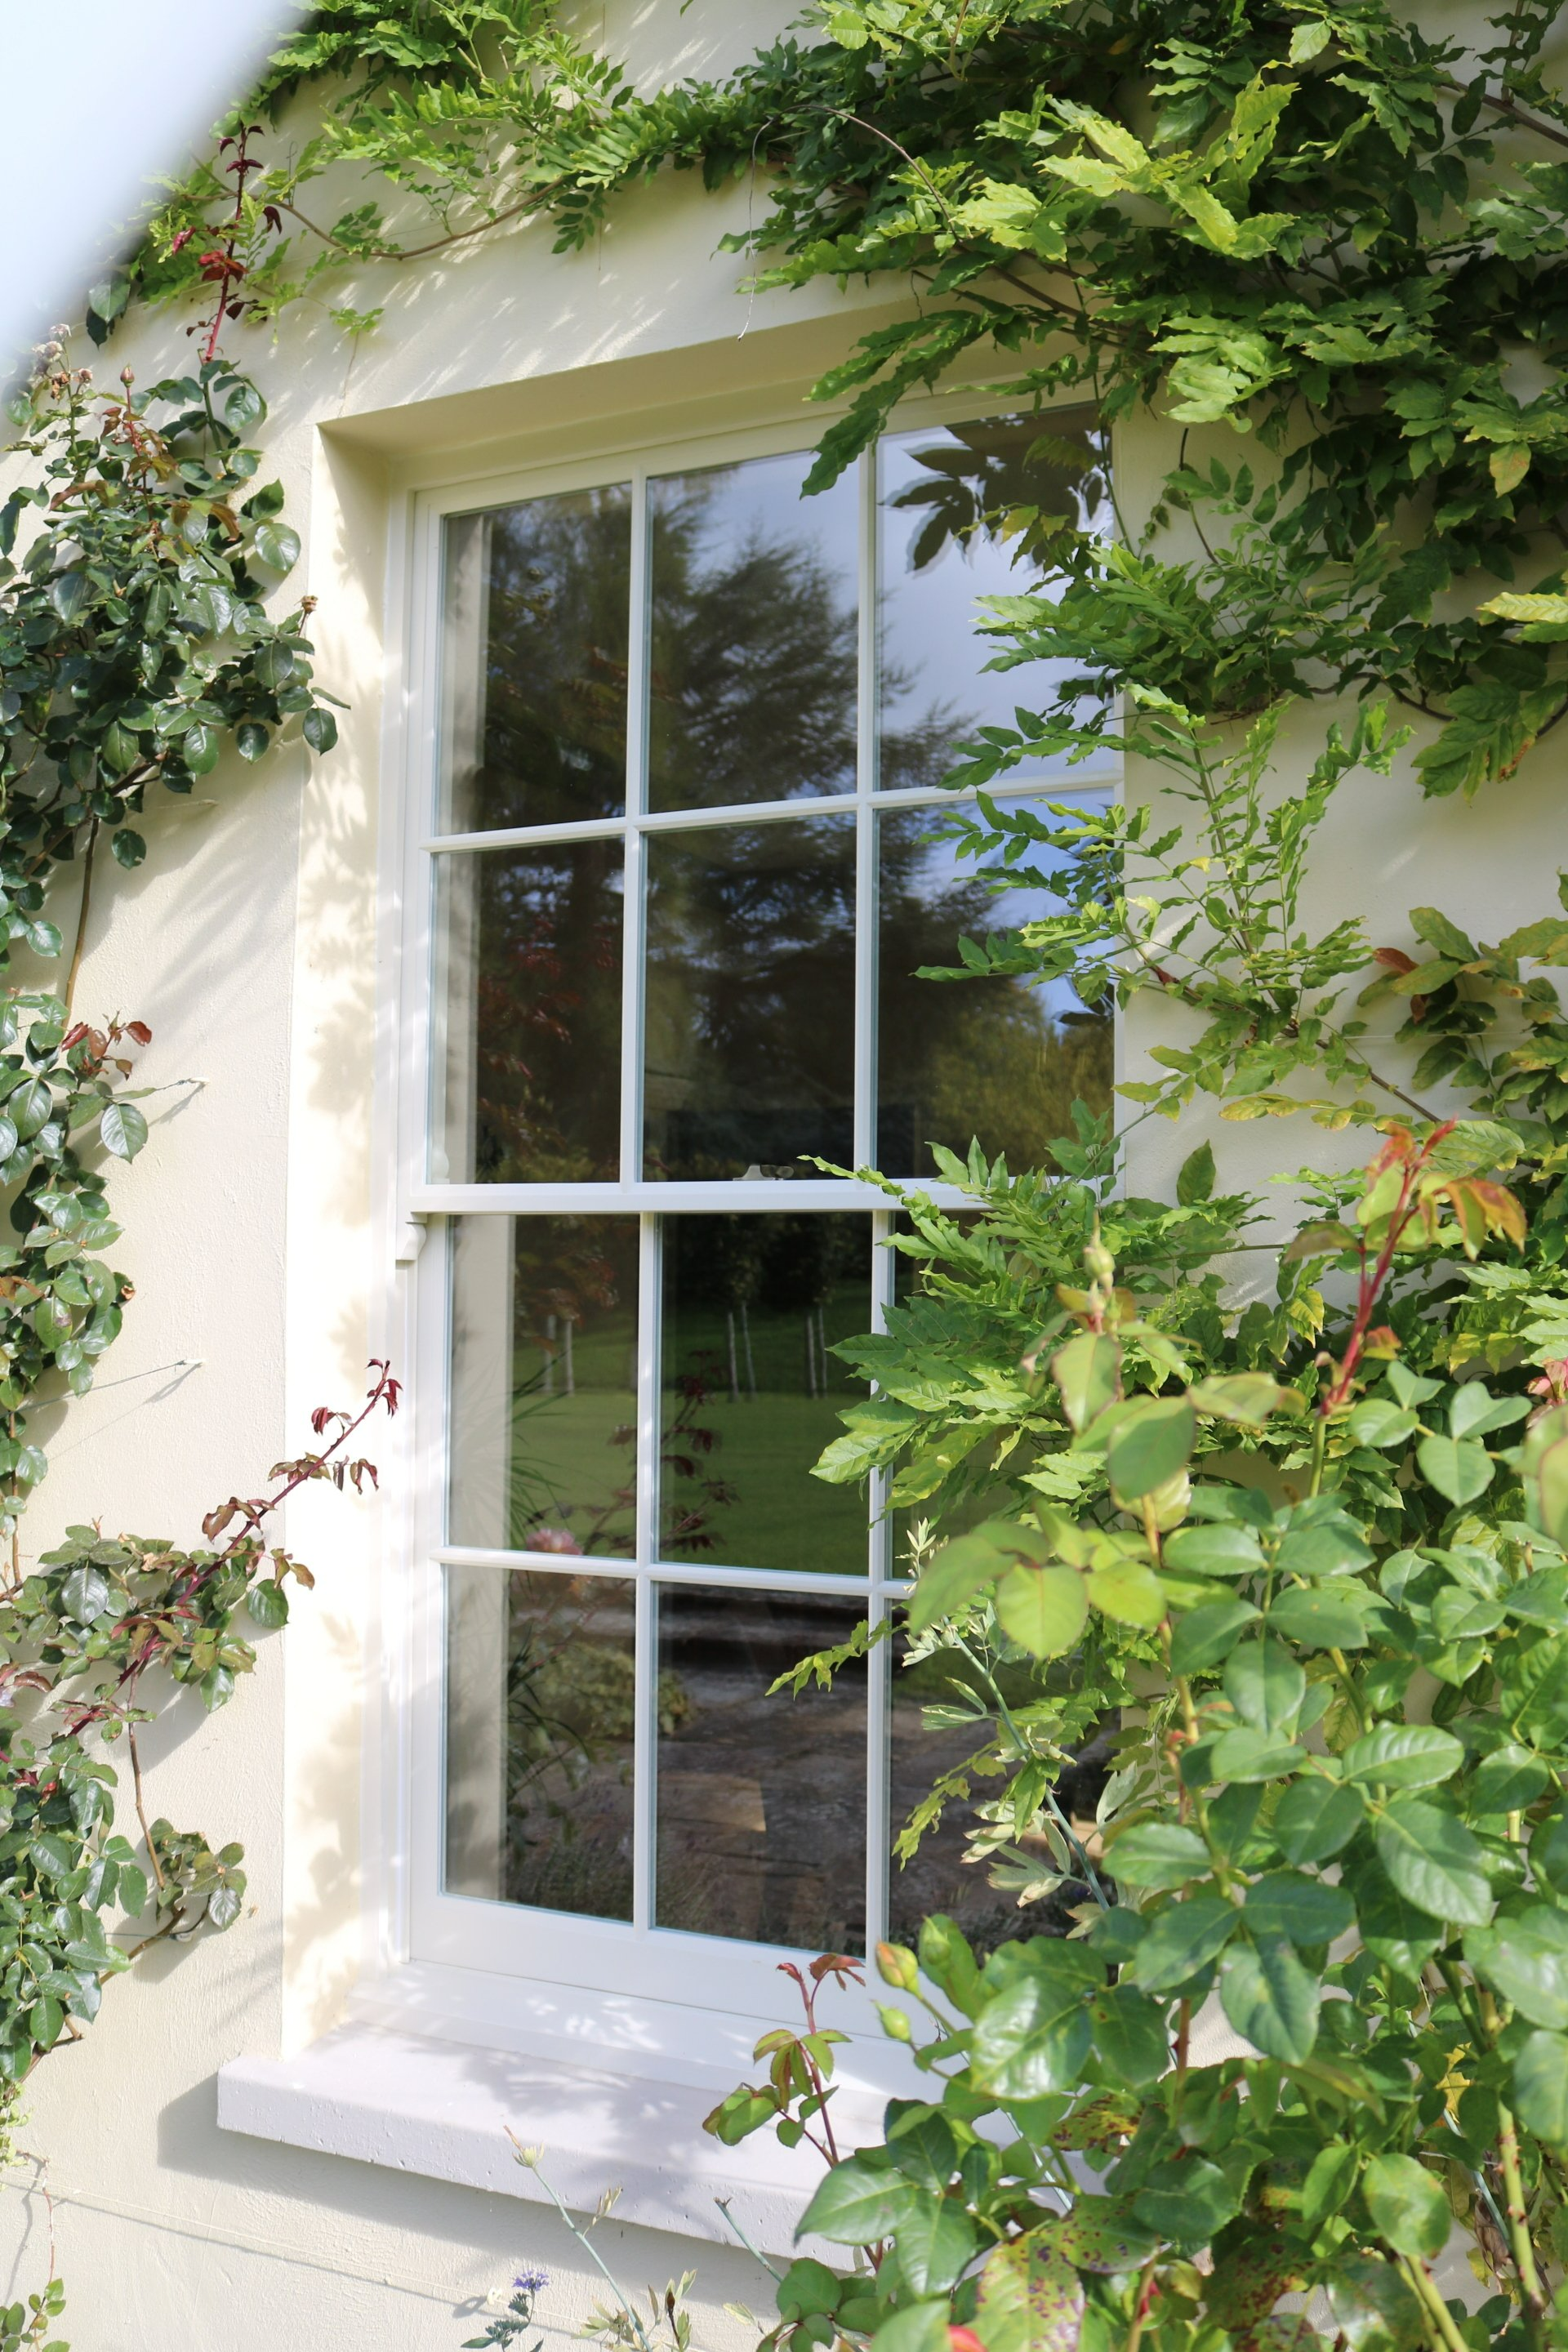 Midhurst Windows and Doors in West Sussex